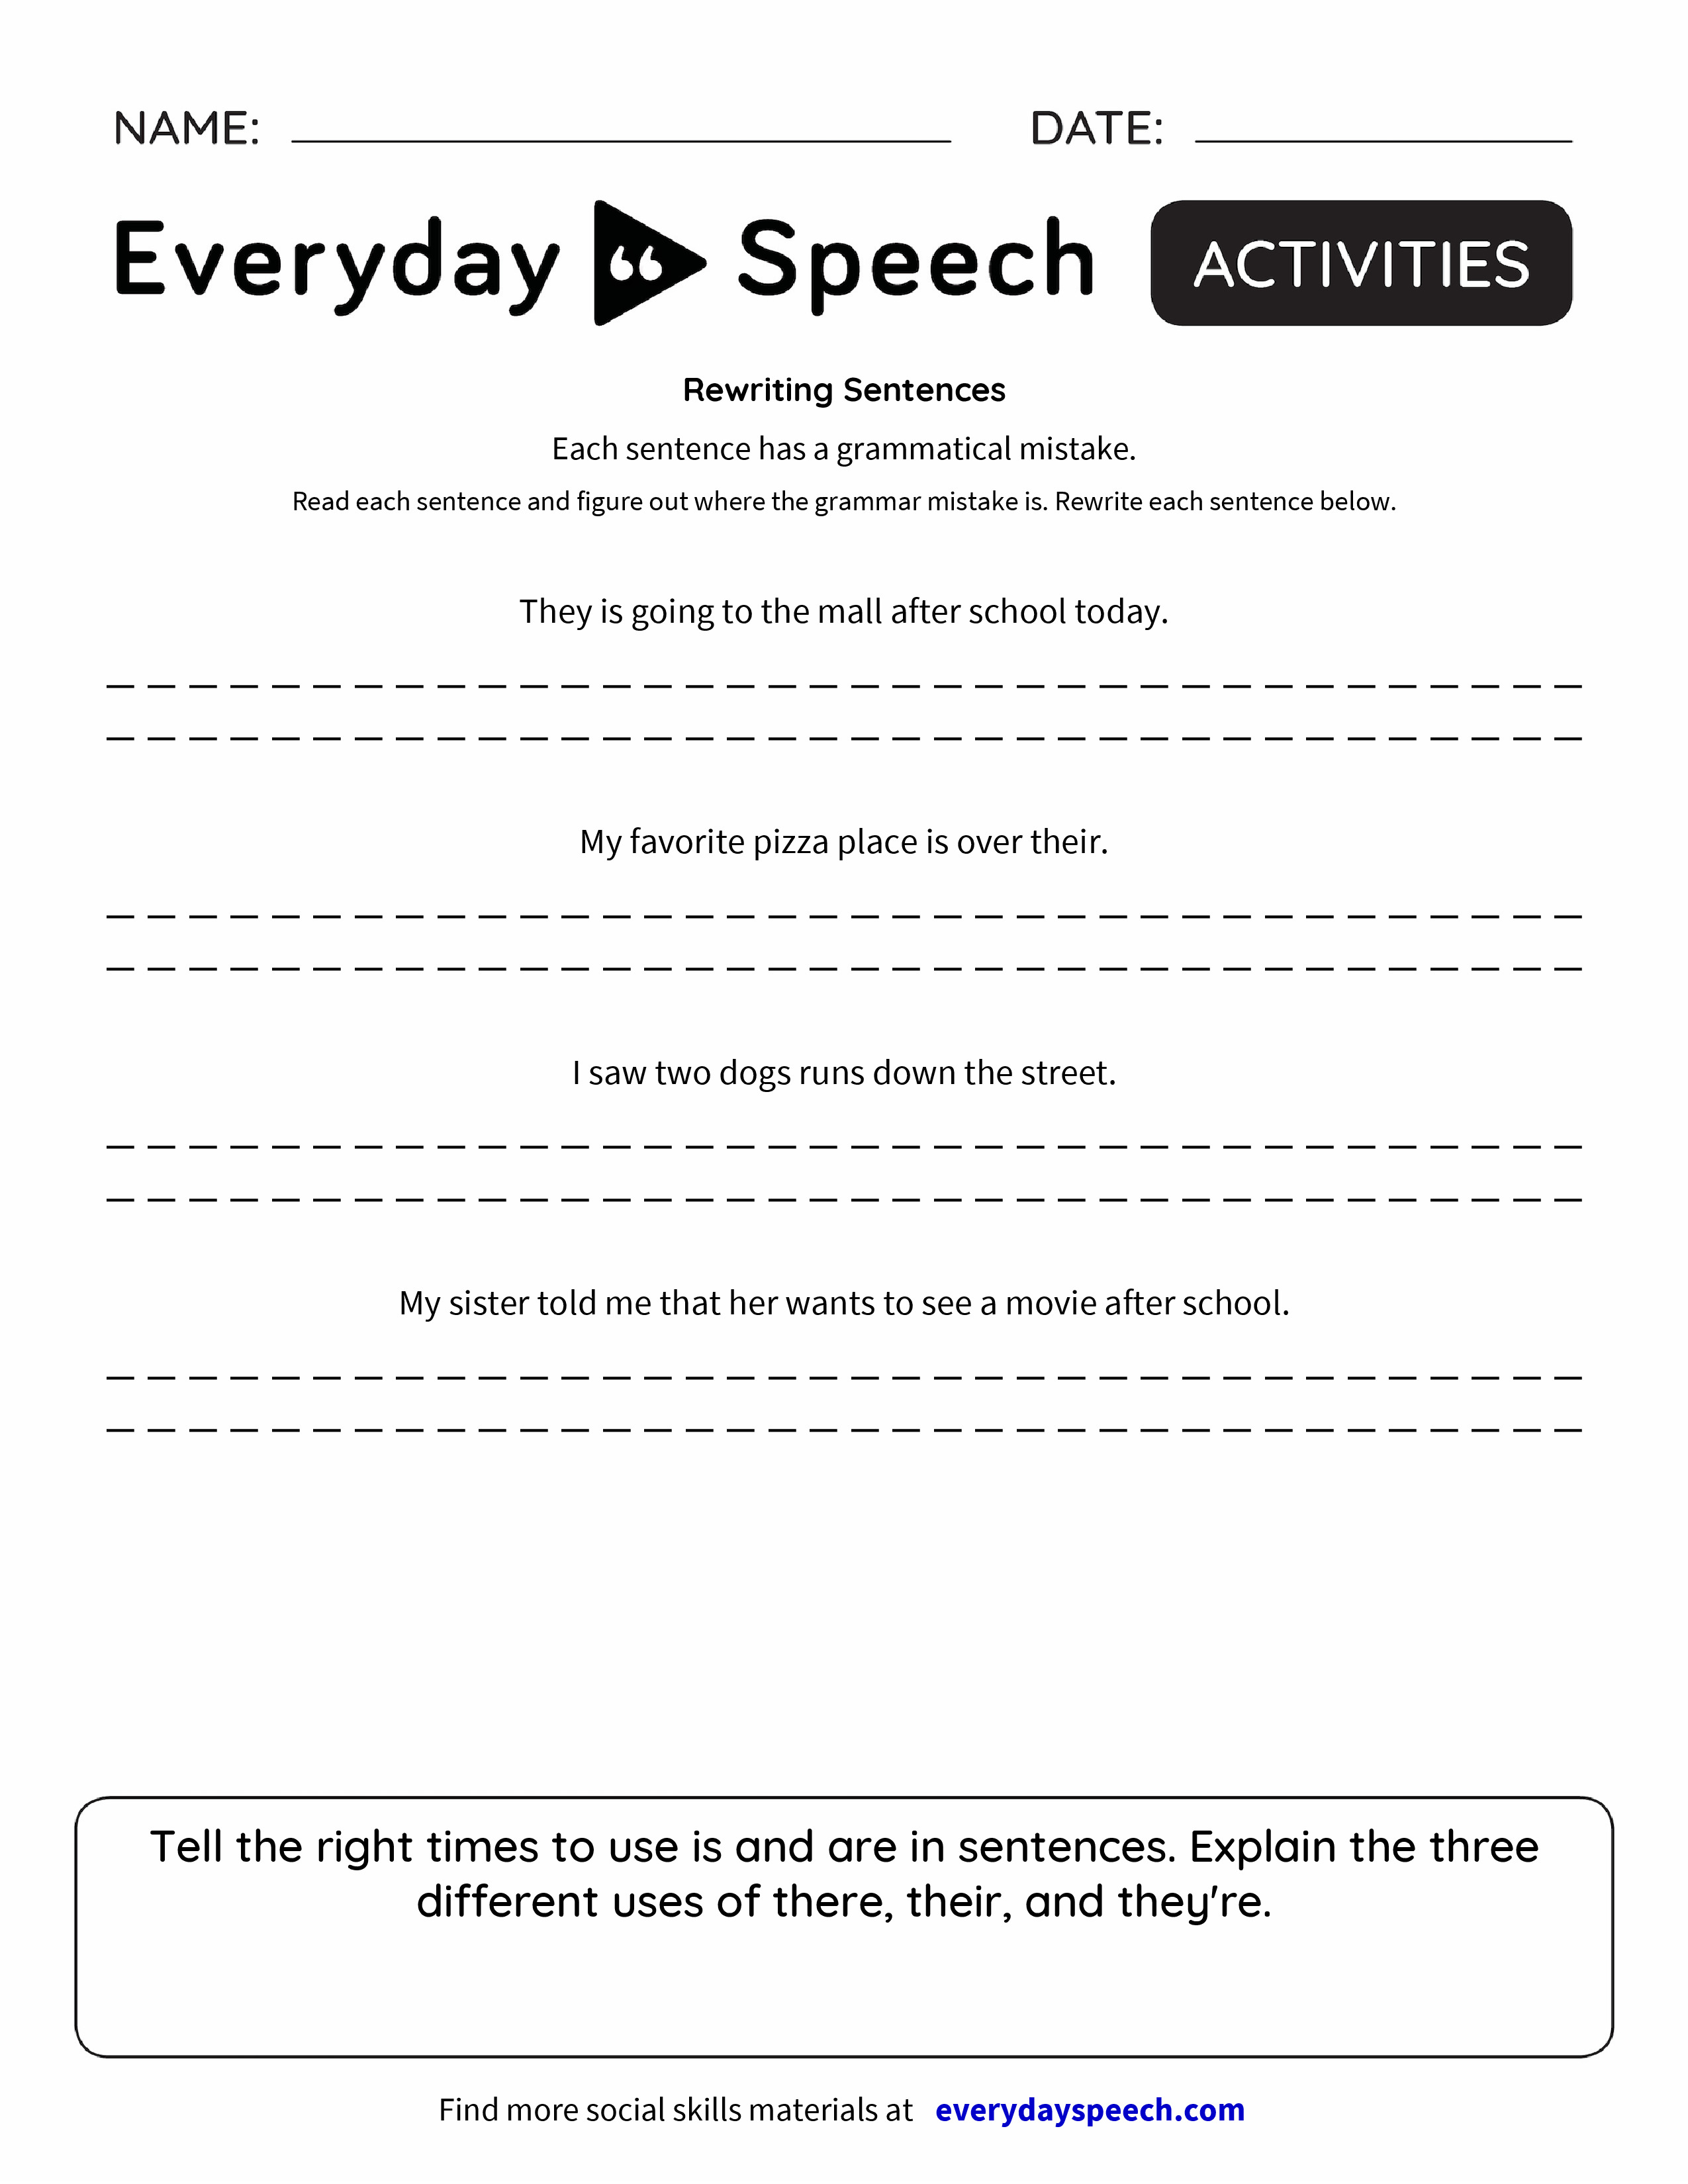 Rewriting Sentences Everyday Speech Everyday Speech